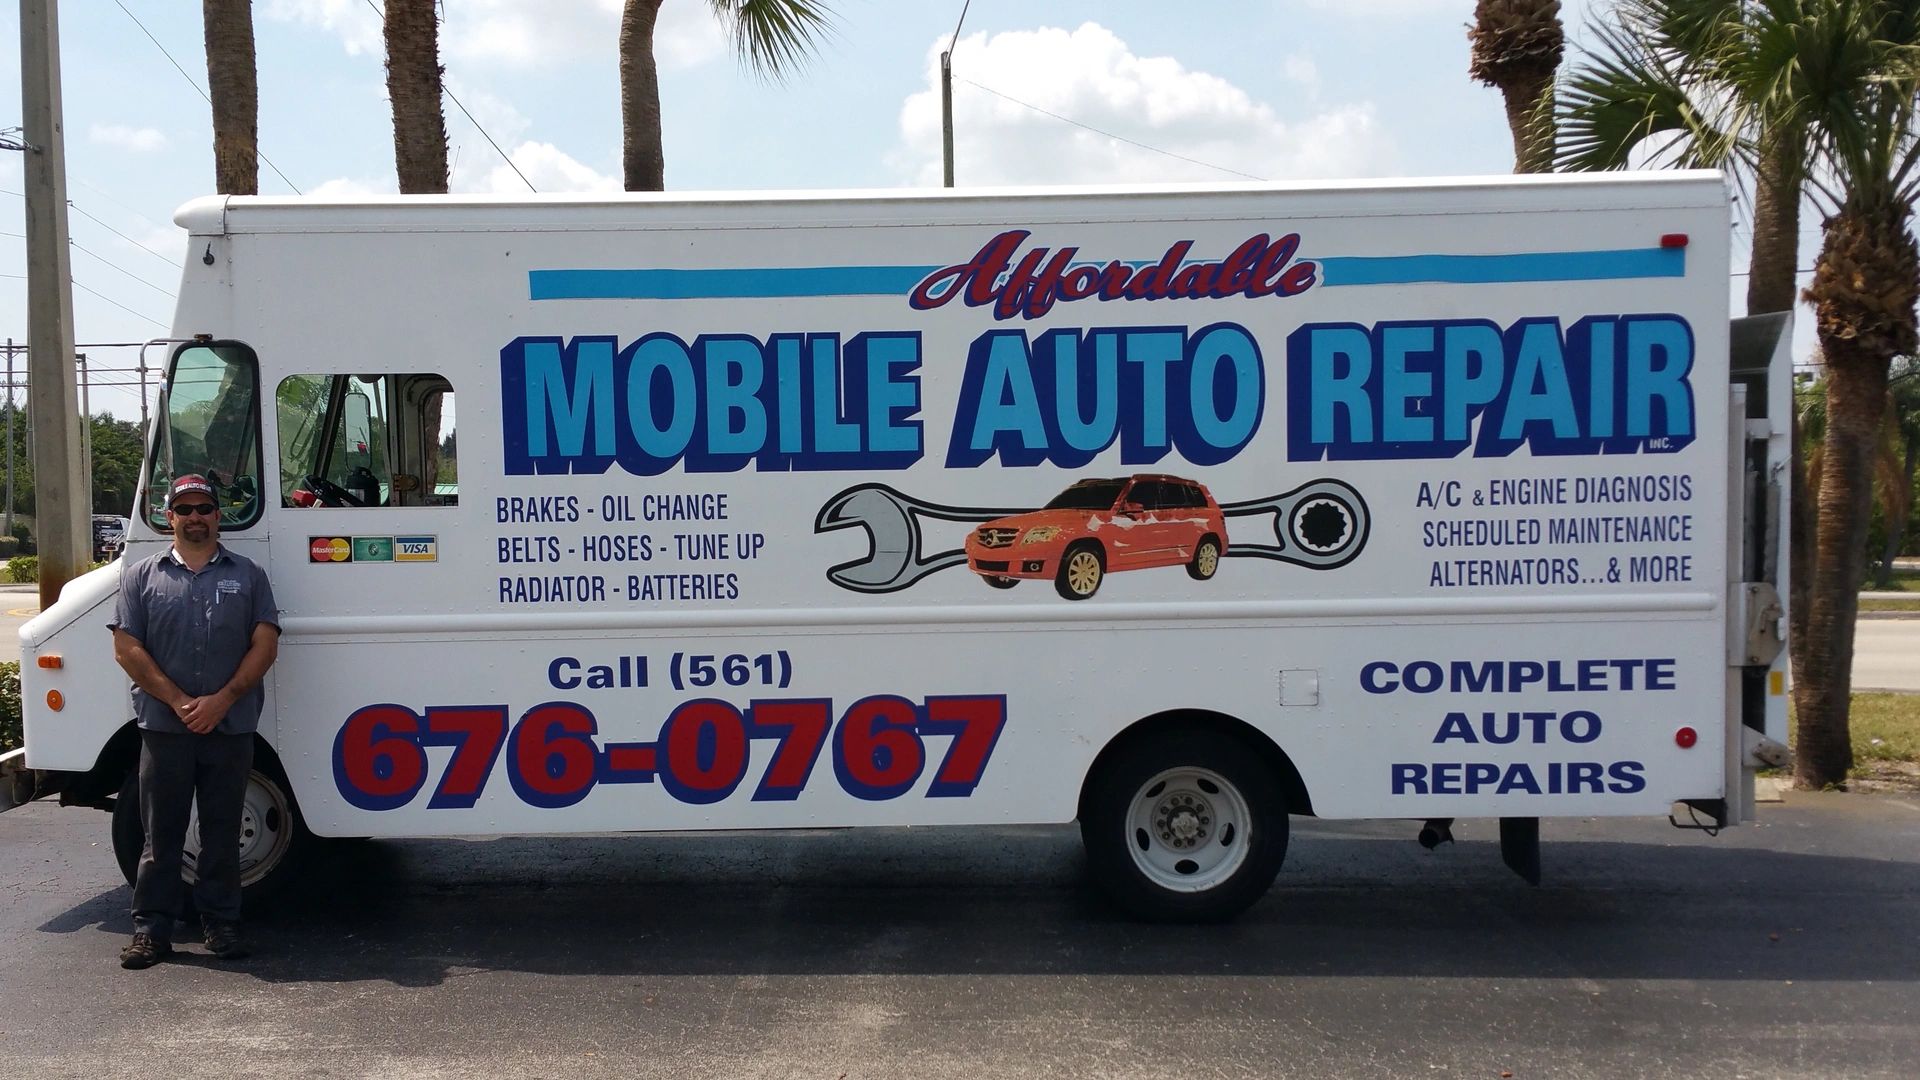 Mobile auto repair shop on wheels